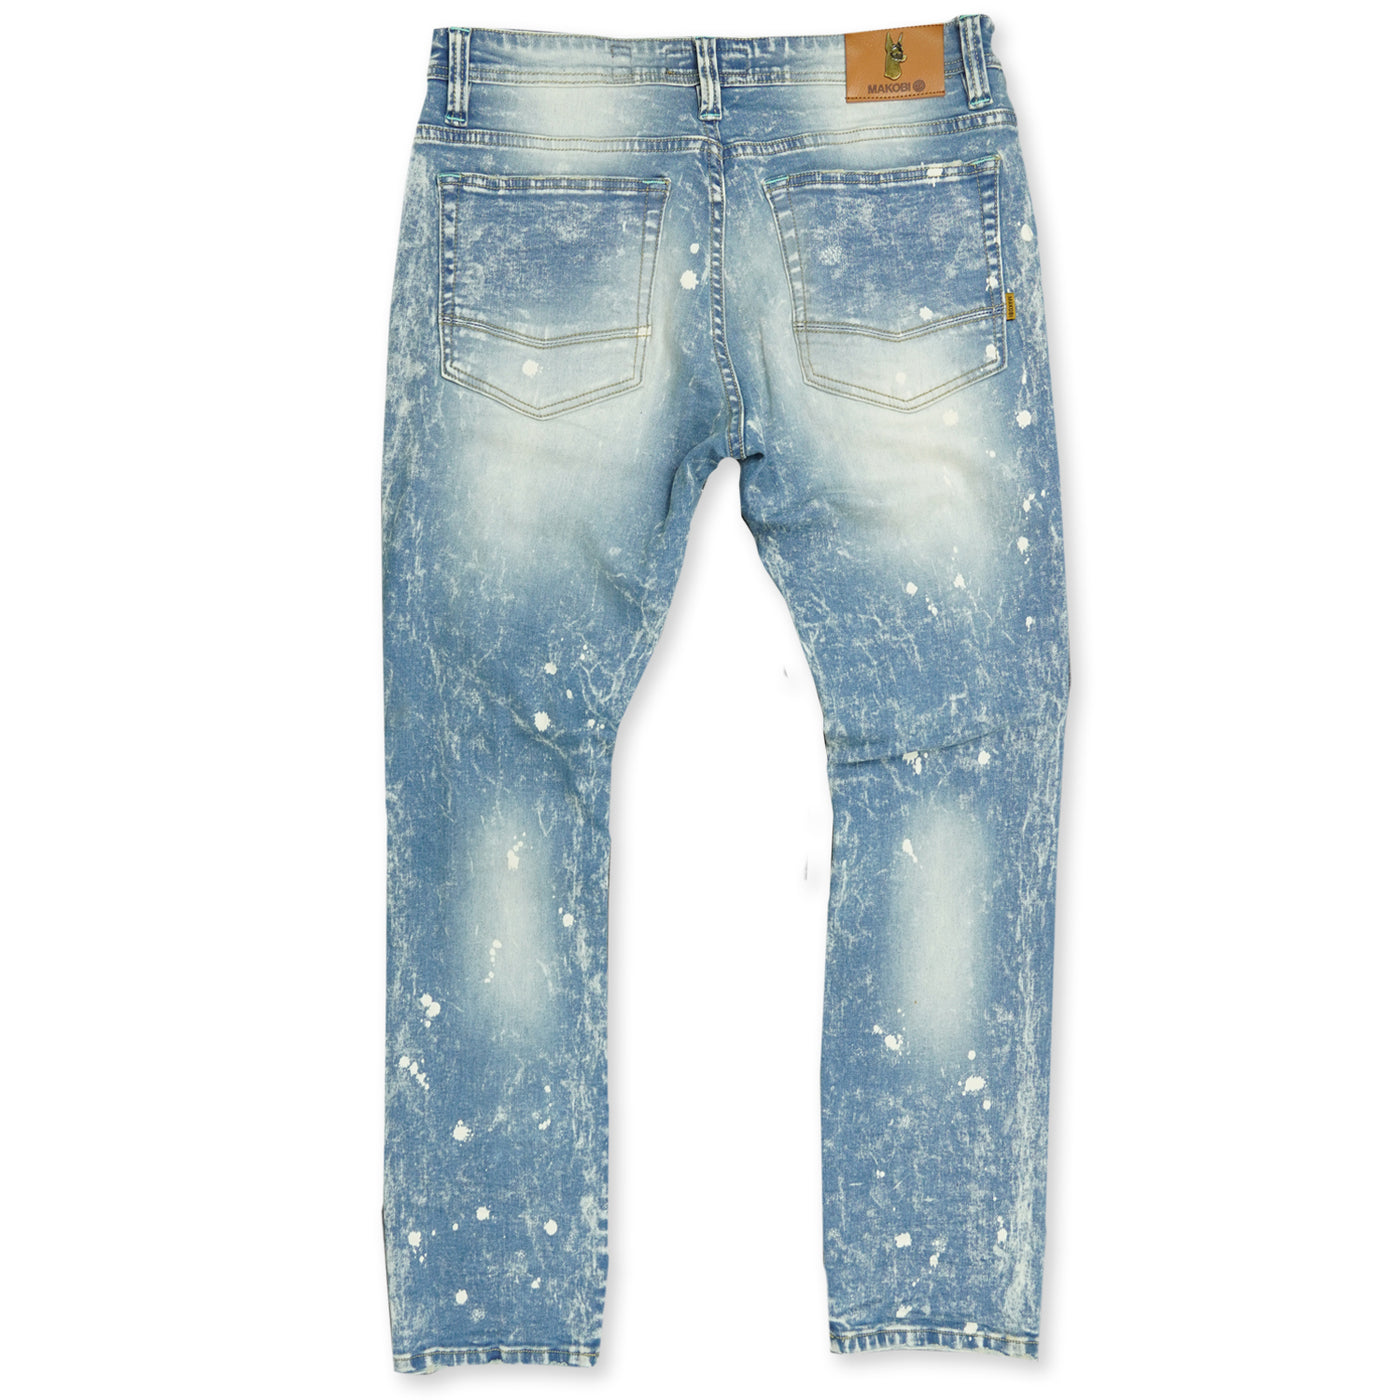 M1982 Pismo Shredded Jeans w/ teepu ẹgbẹ - Dirt